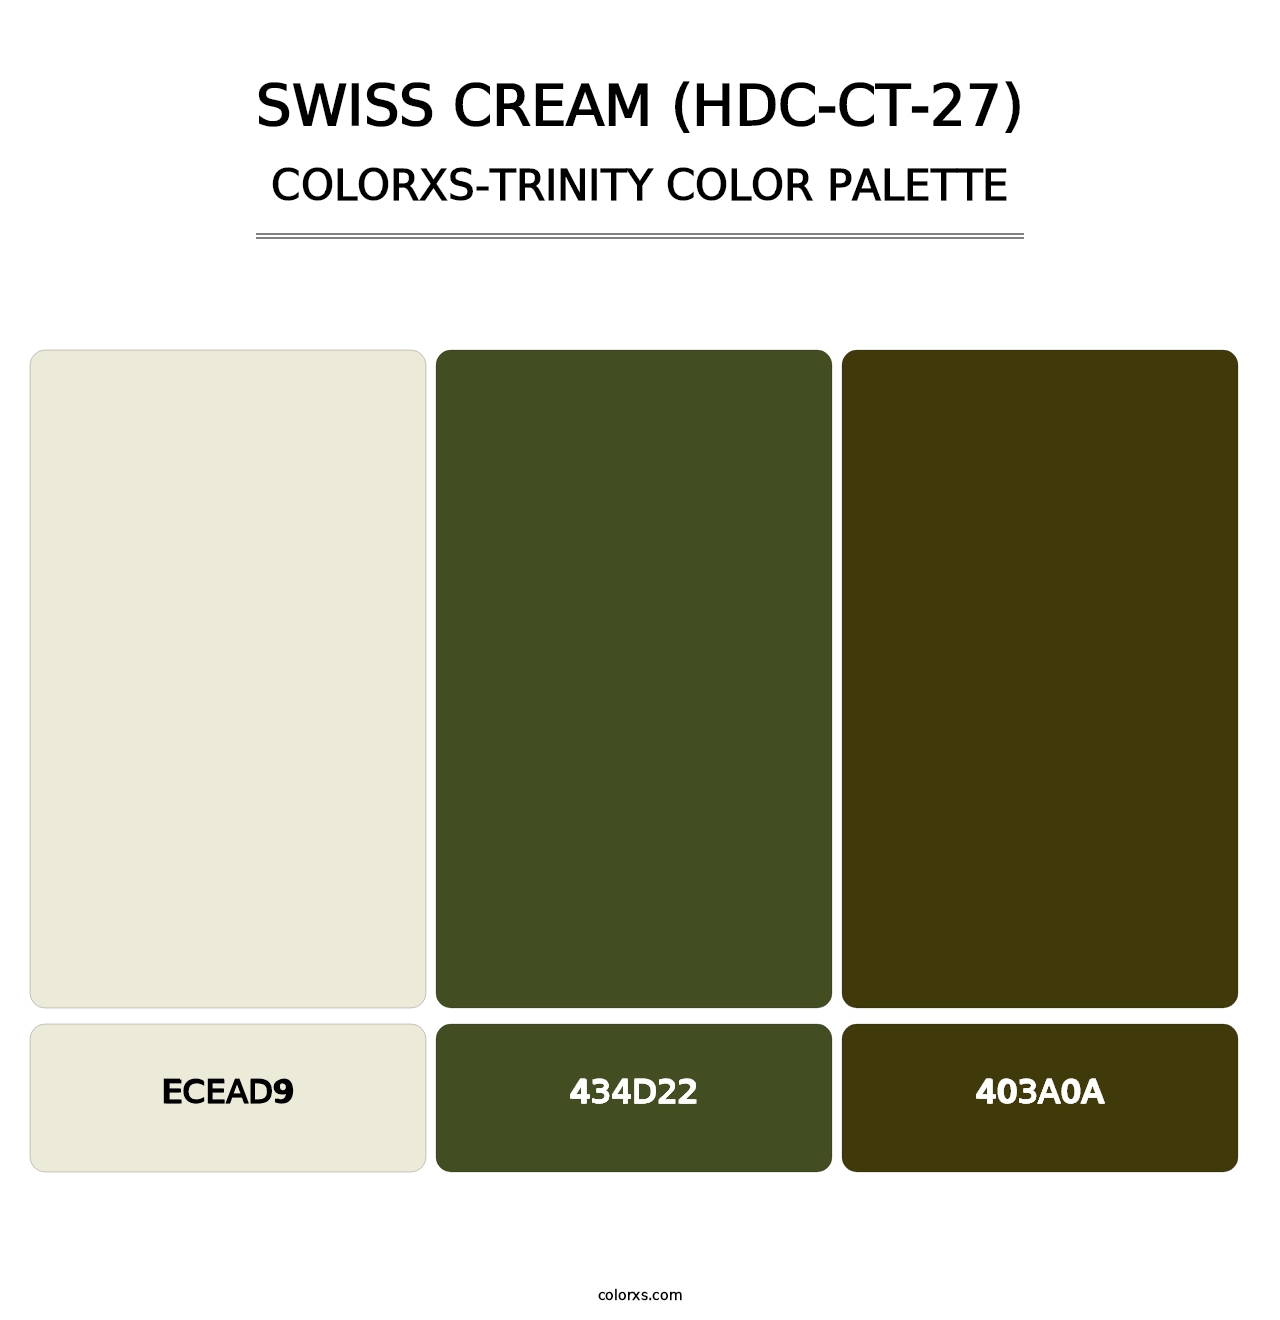 Swiss Cream (HDC-CT-27) - Colorxs Trinity Palette